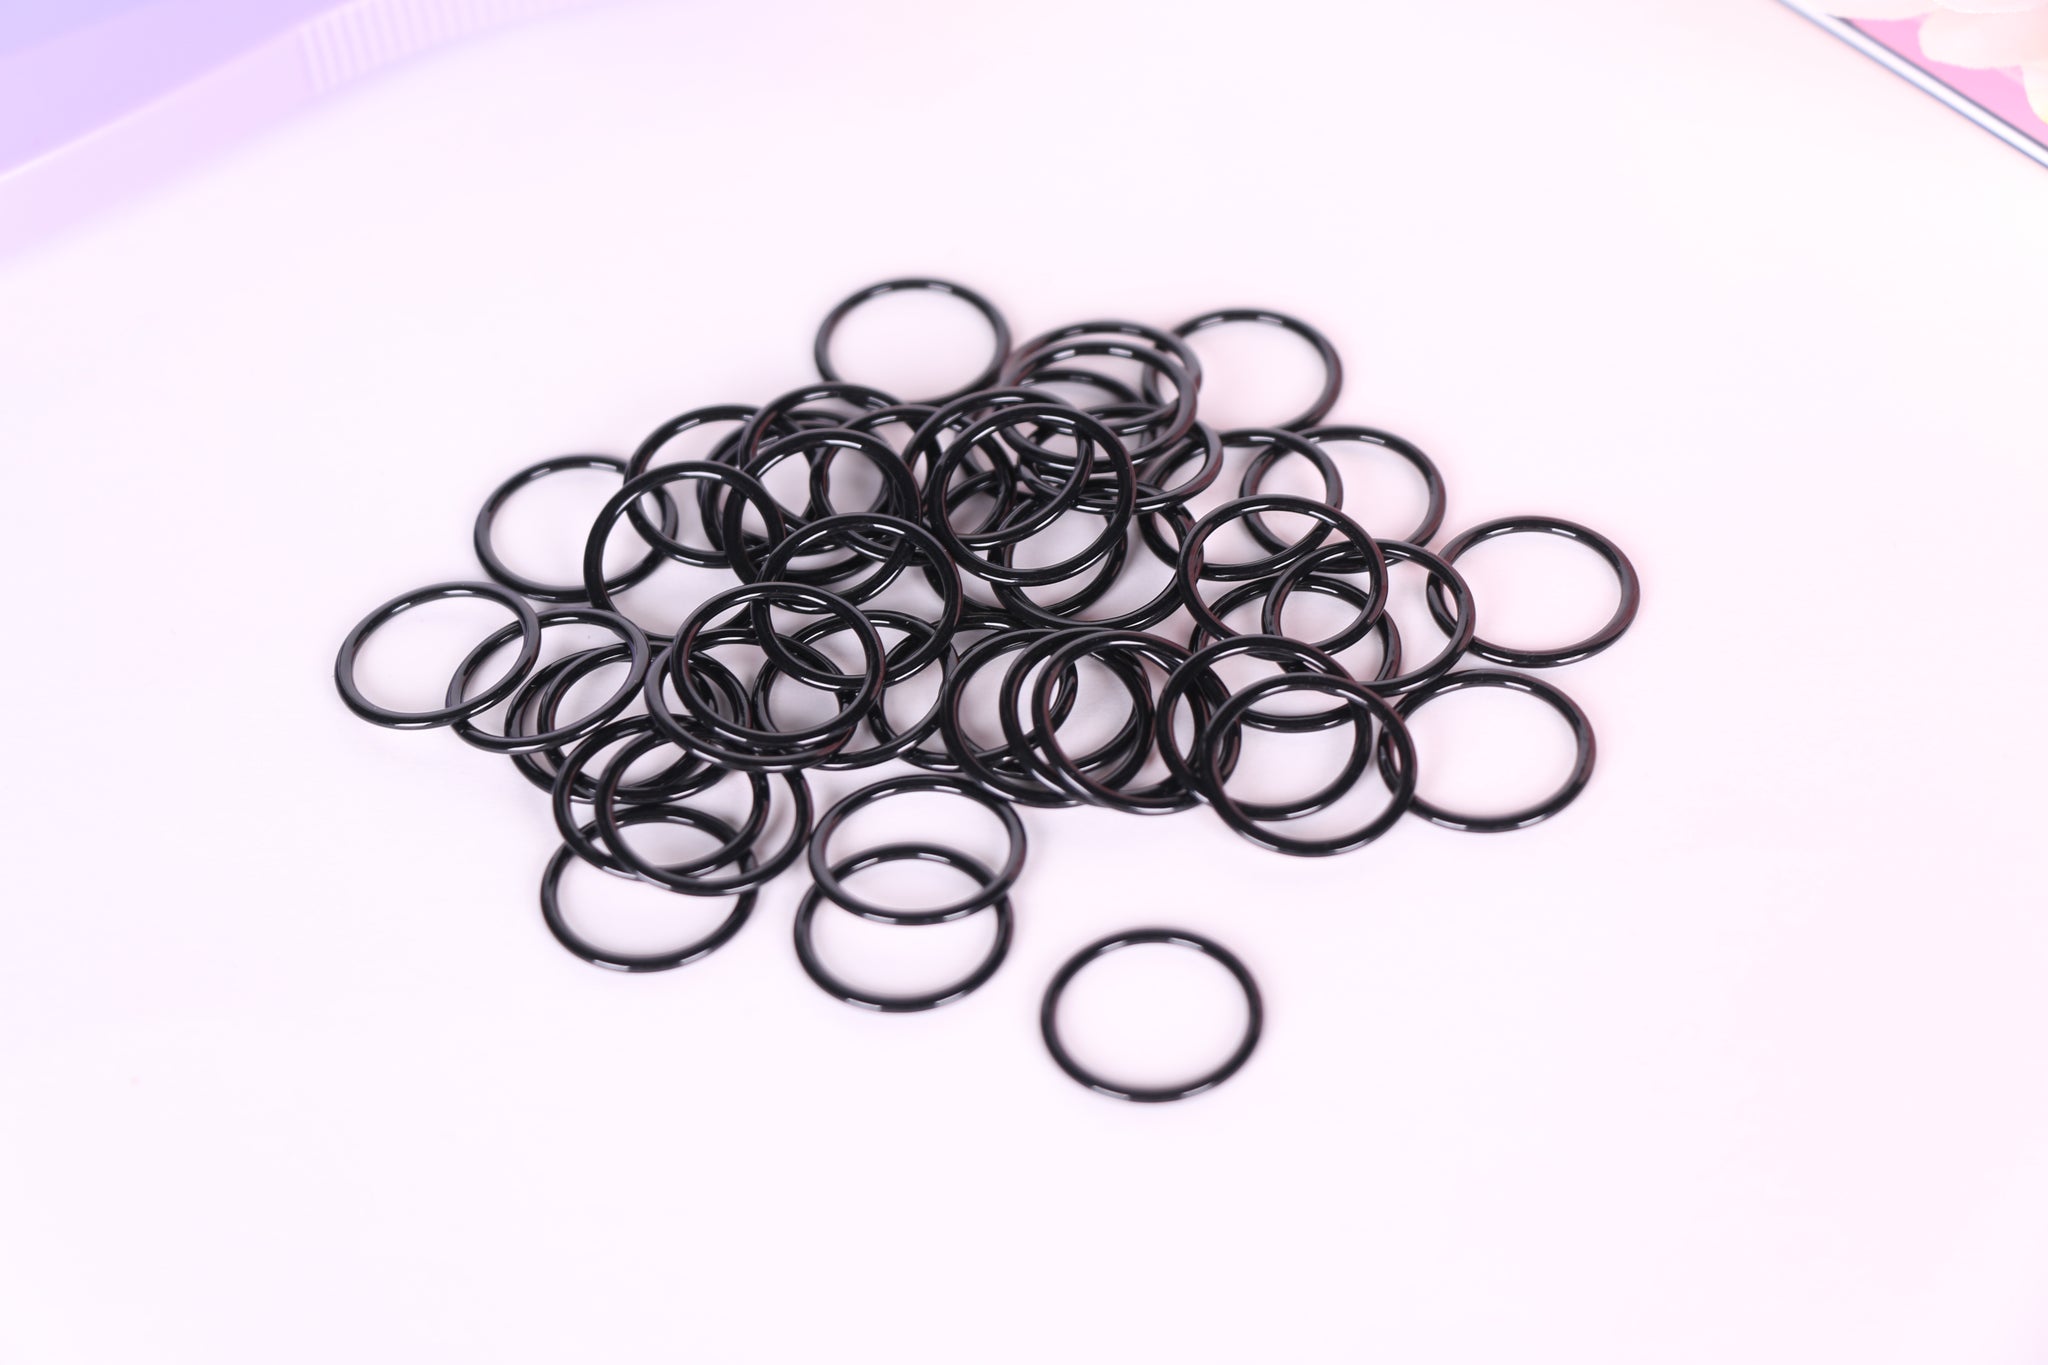 black nylon coated rings bra making. tailormadeshoppe, evie la luve, madalynne intimates